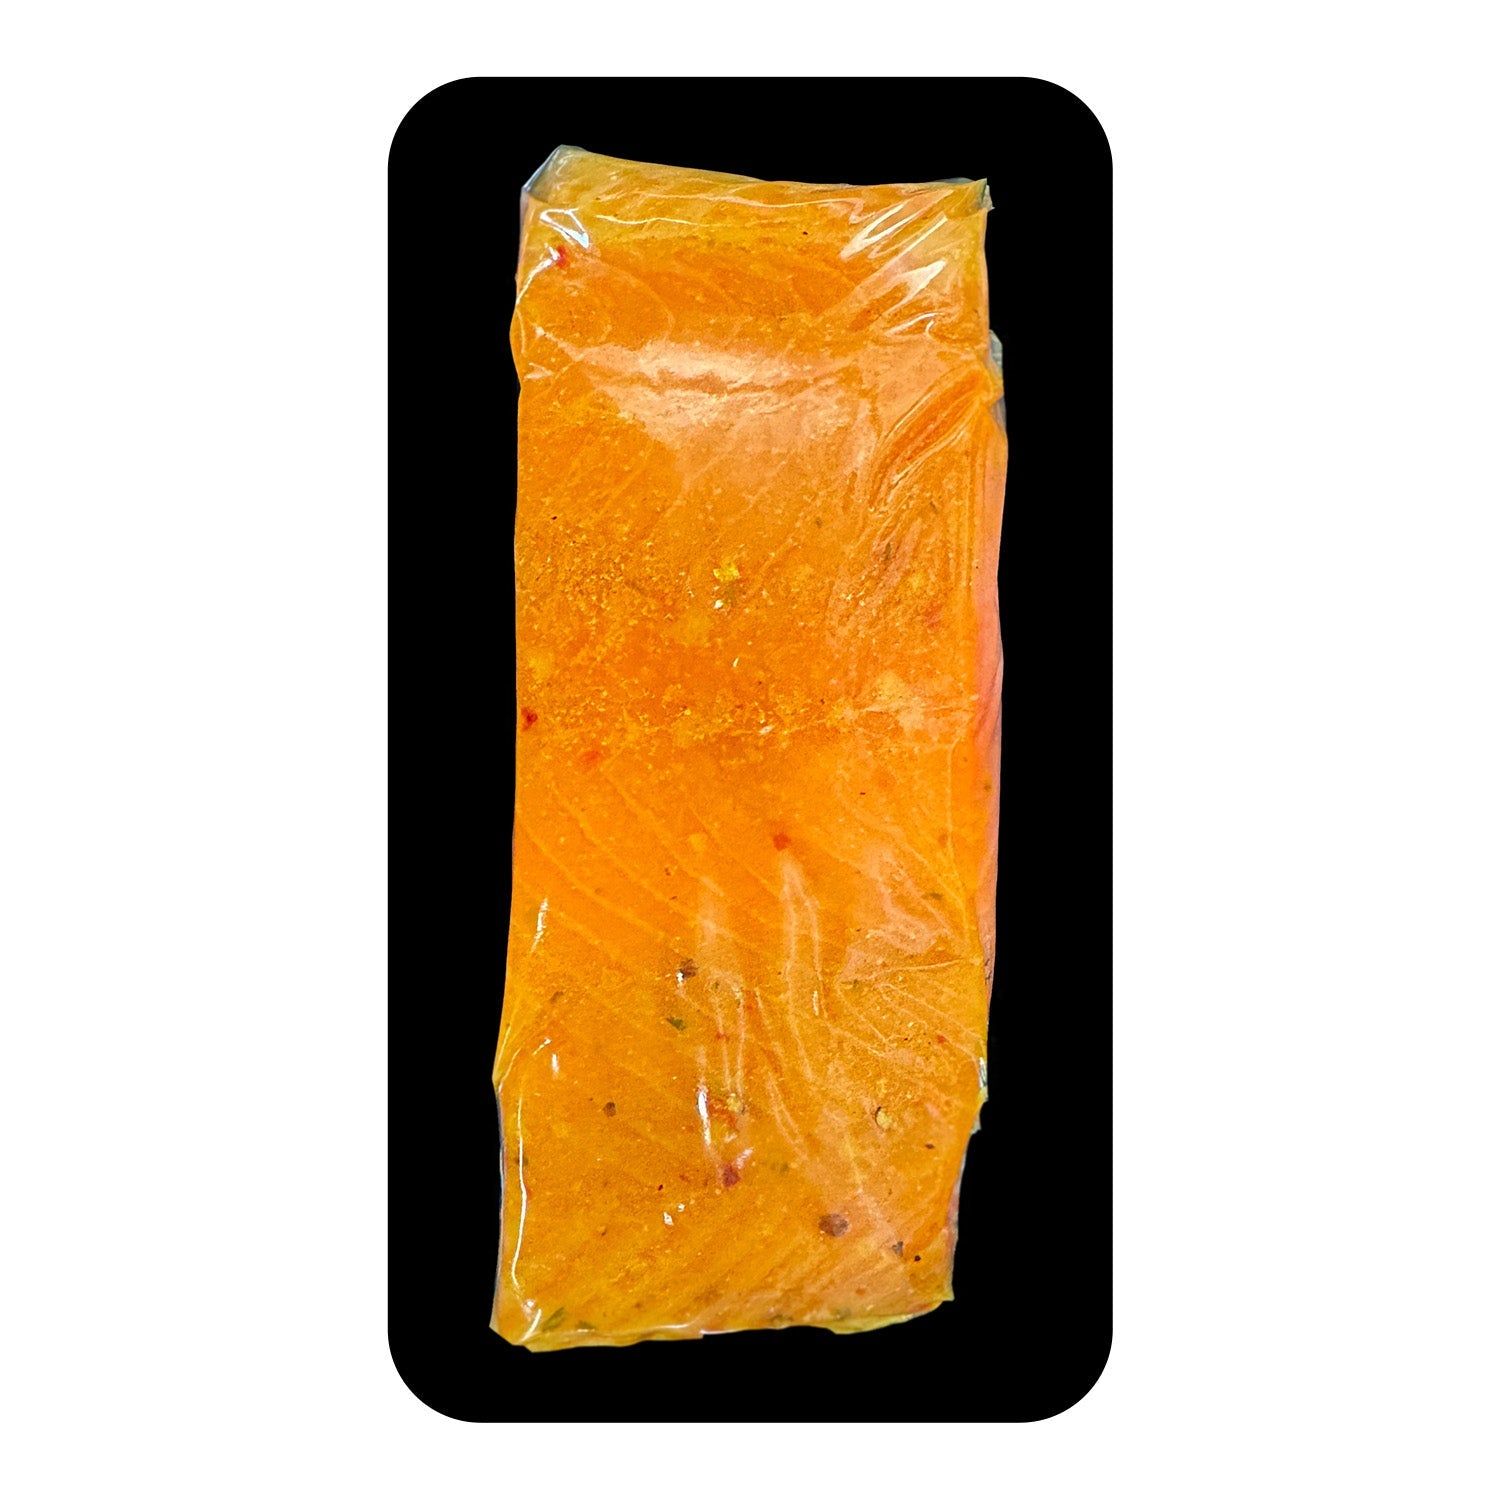 Pastrami Smoked Salmon (2 servings) - Nordic Catch